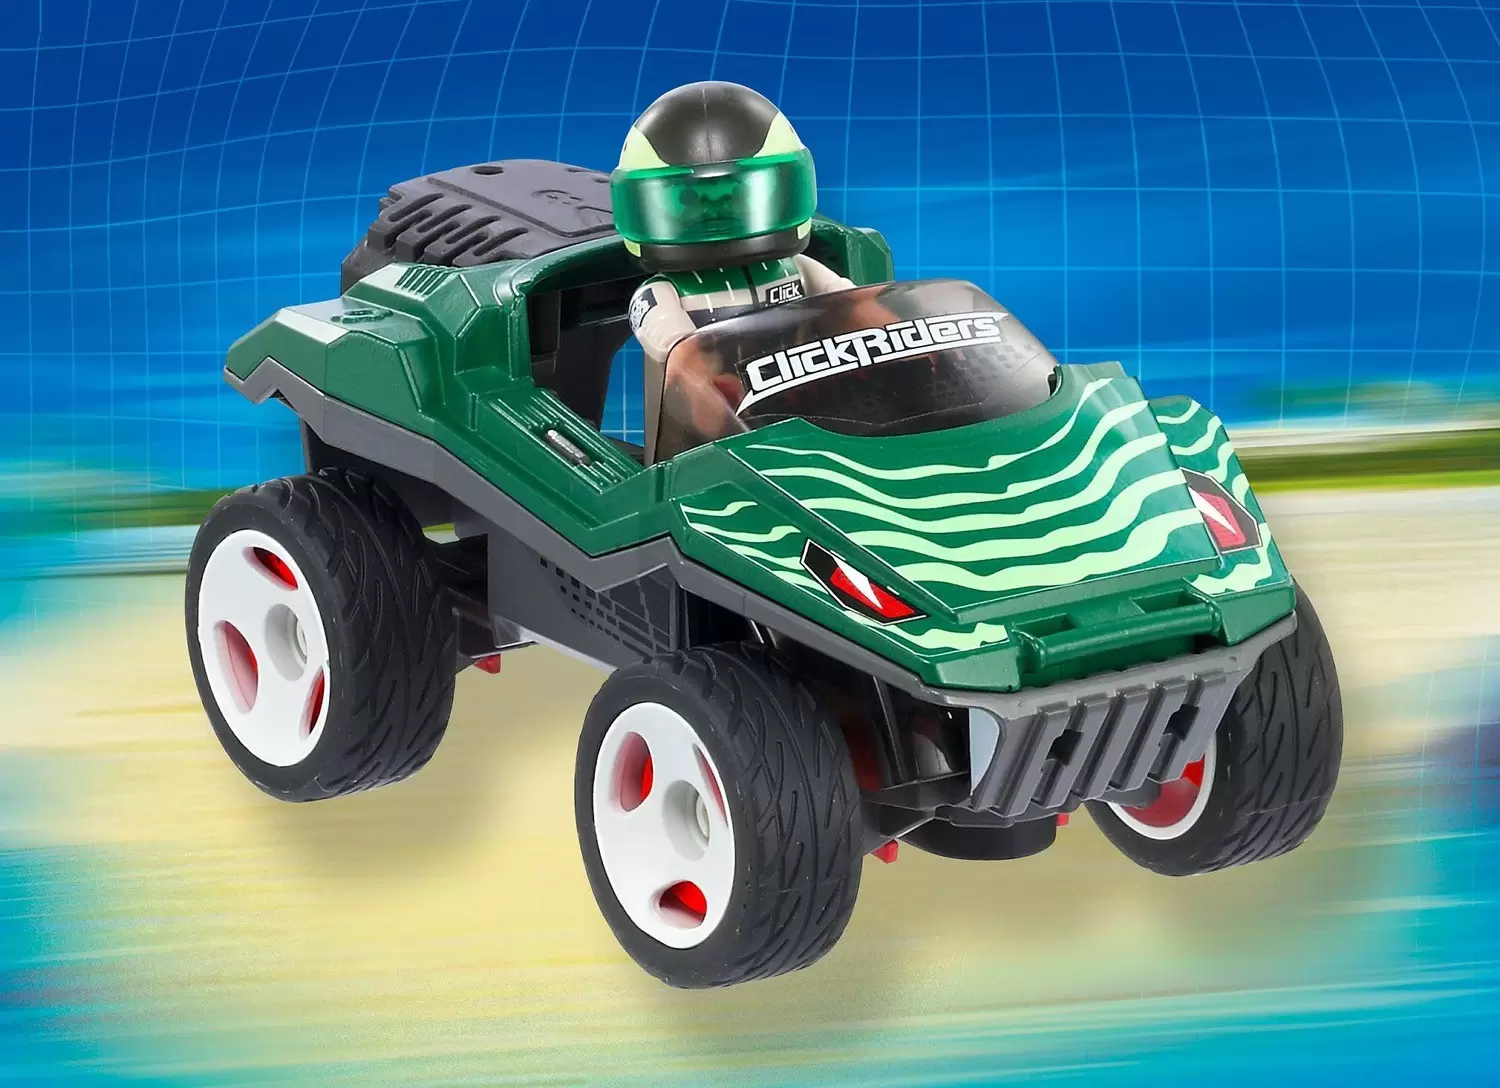 Playmobil Motor Sports - Click & Go Snake Racer ClickRiders